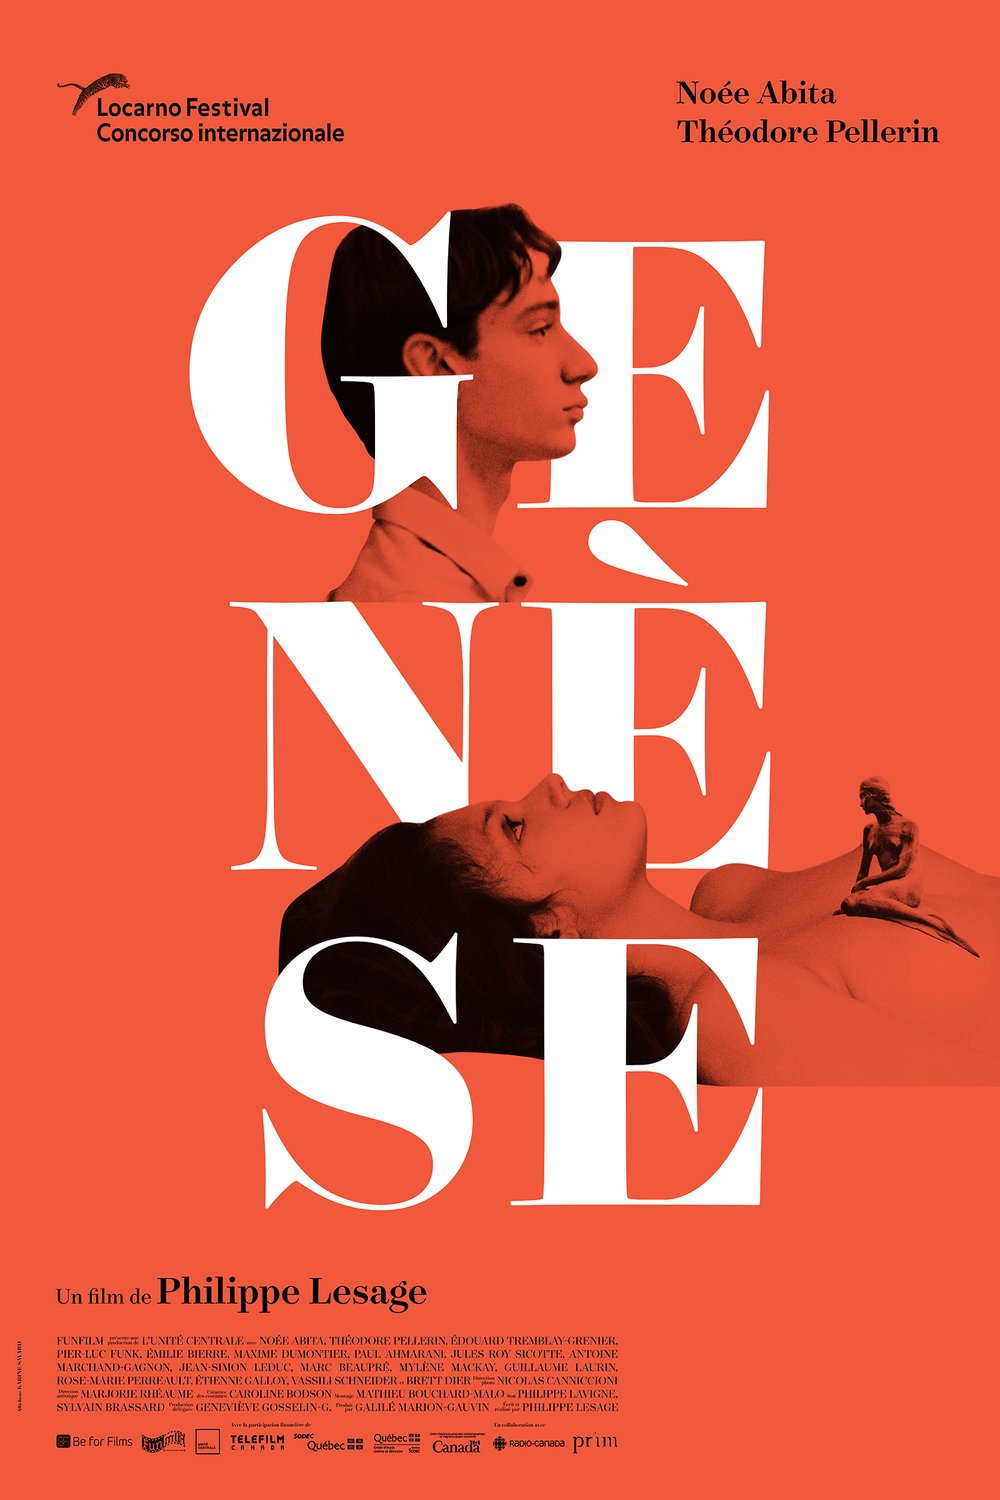 Poster of the movie Genesis